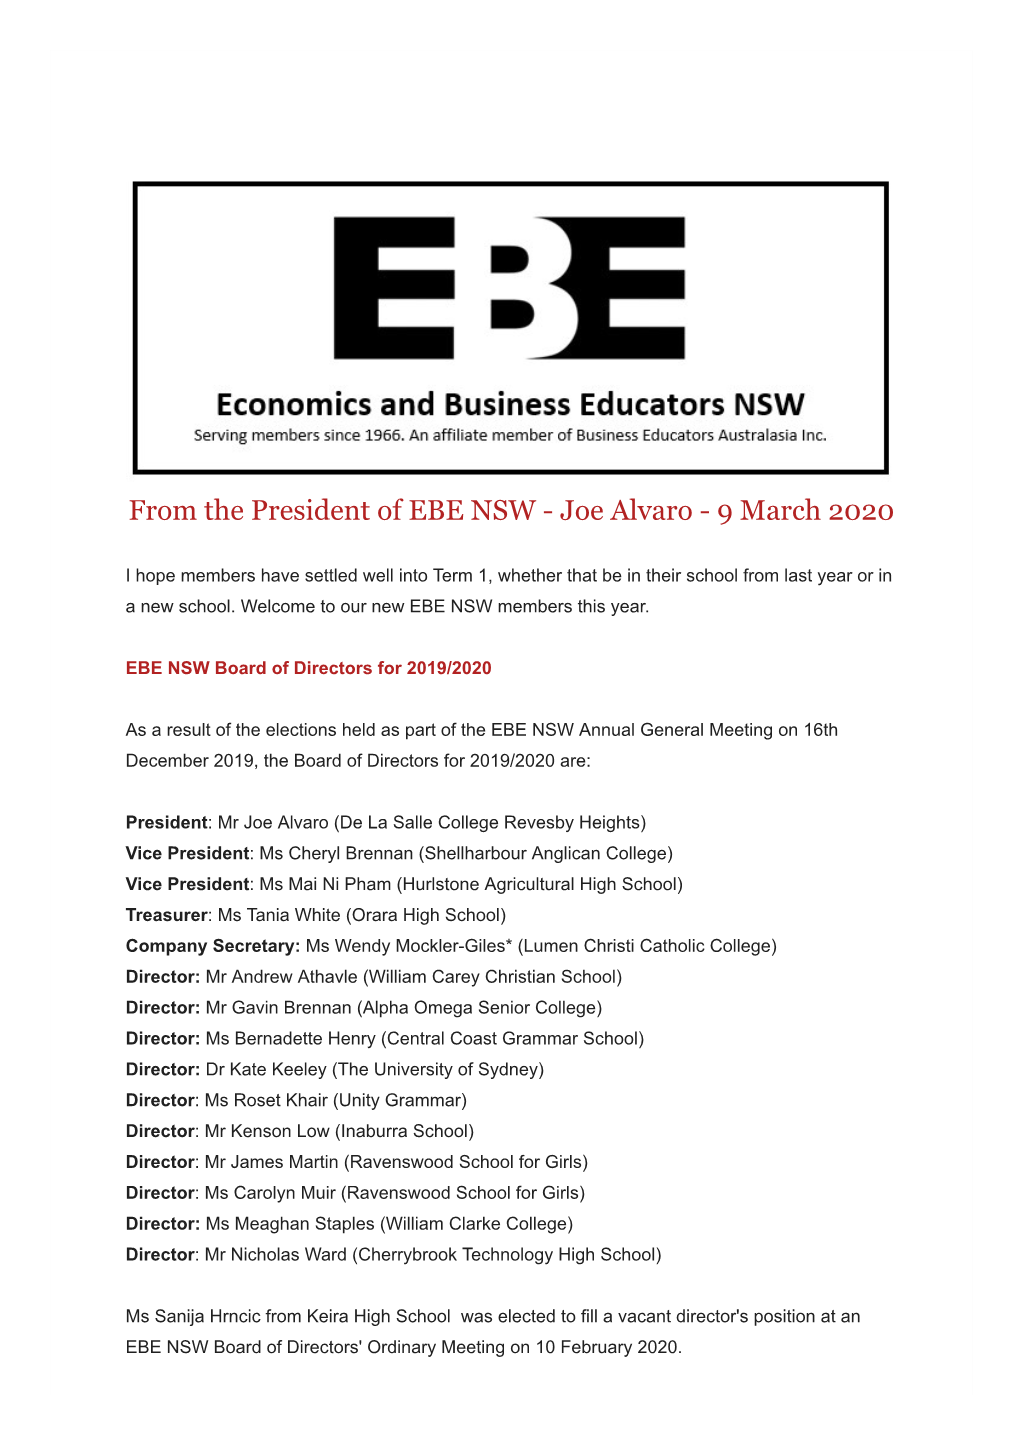 From the President of EBE NSW - Joe Alvaro - 9 March 2020